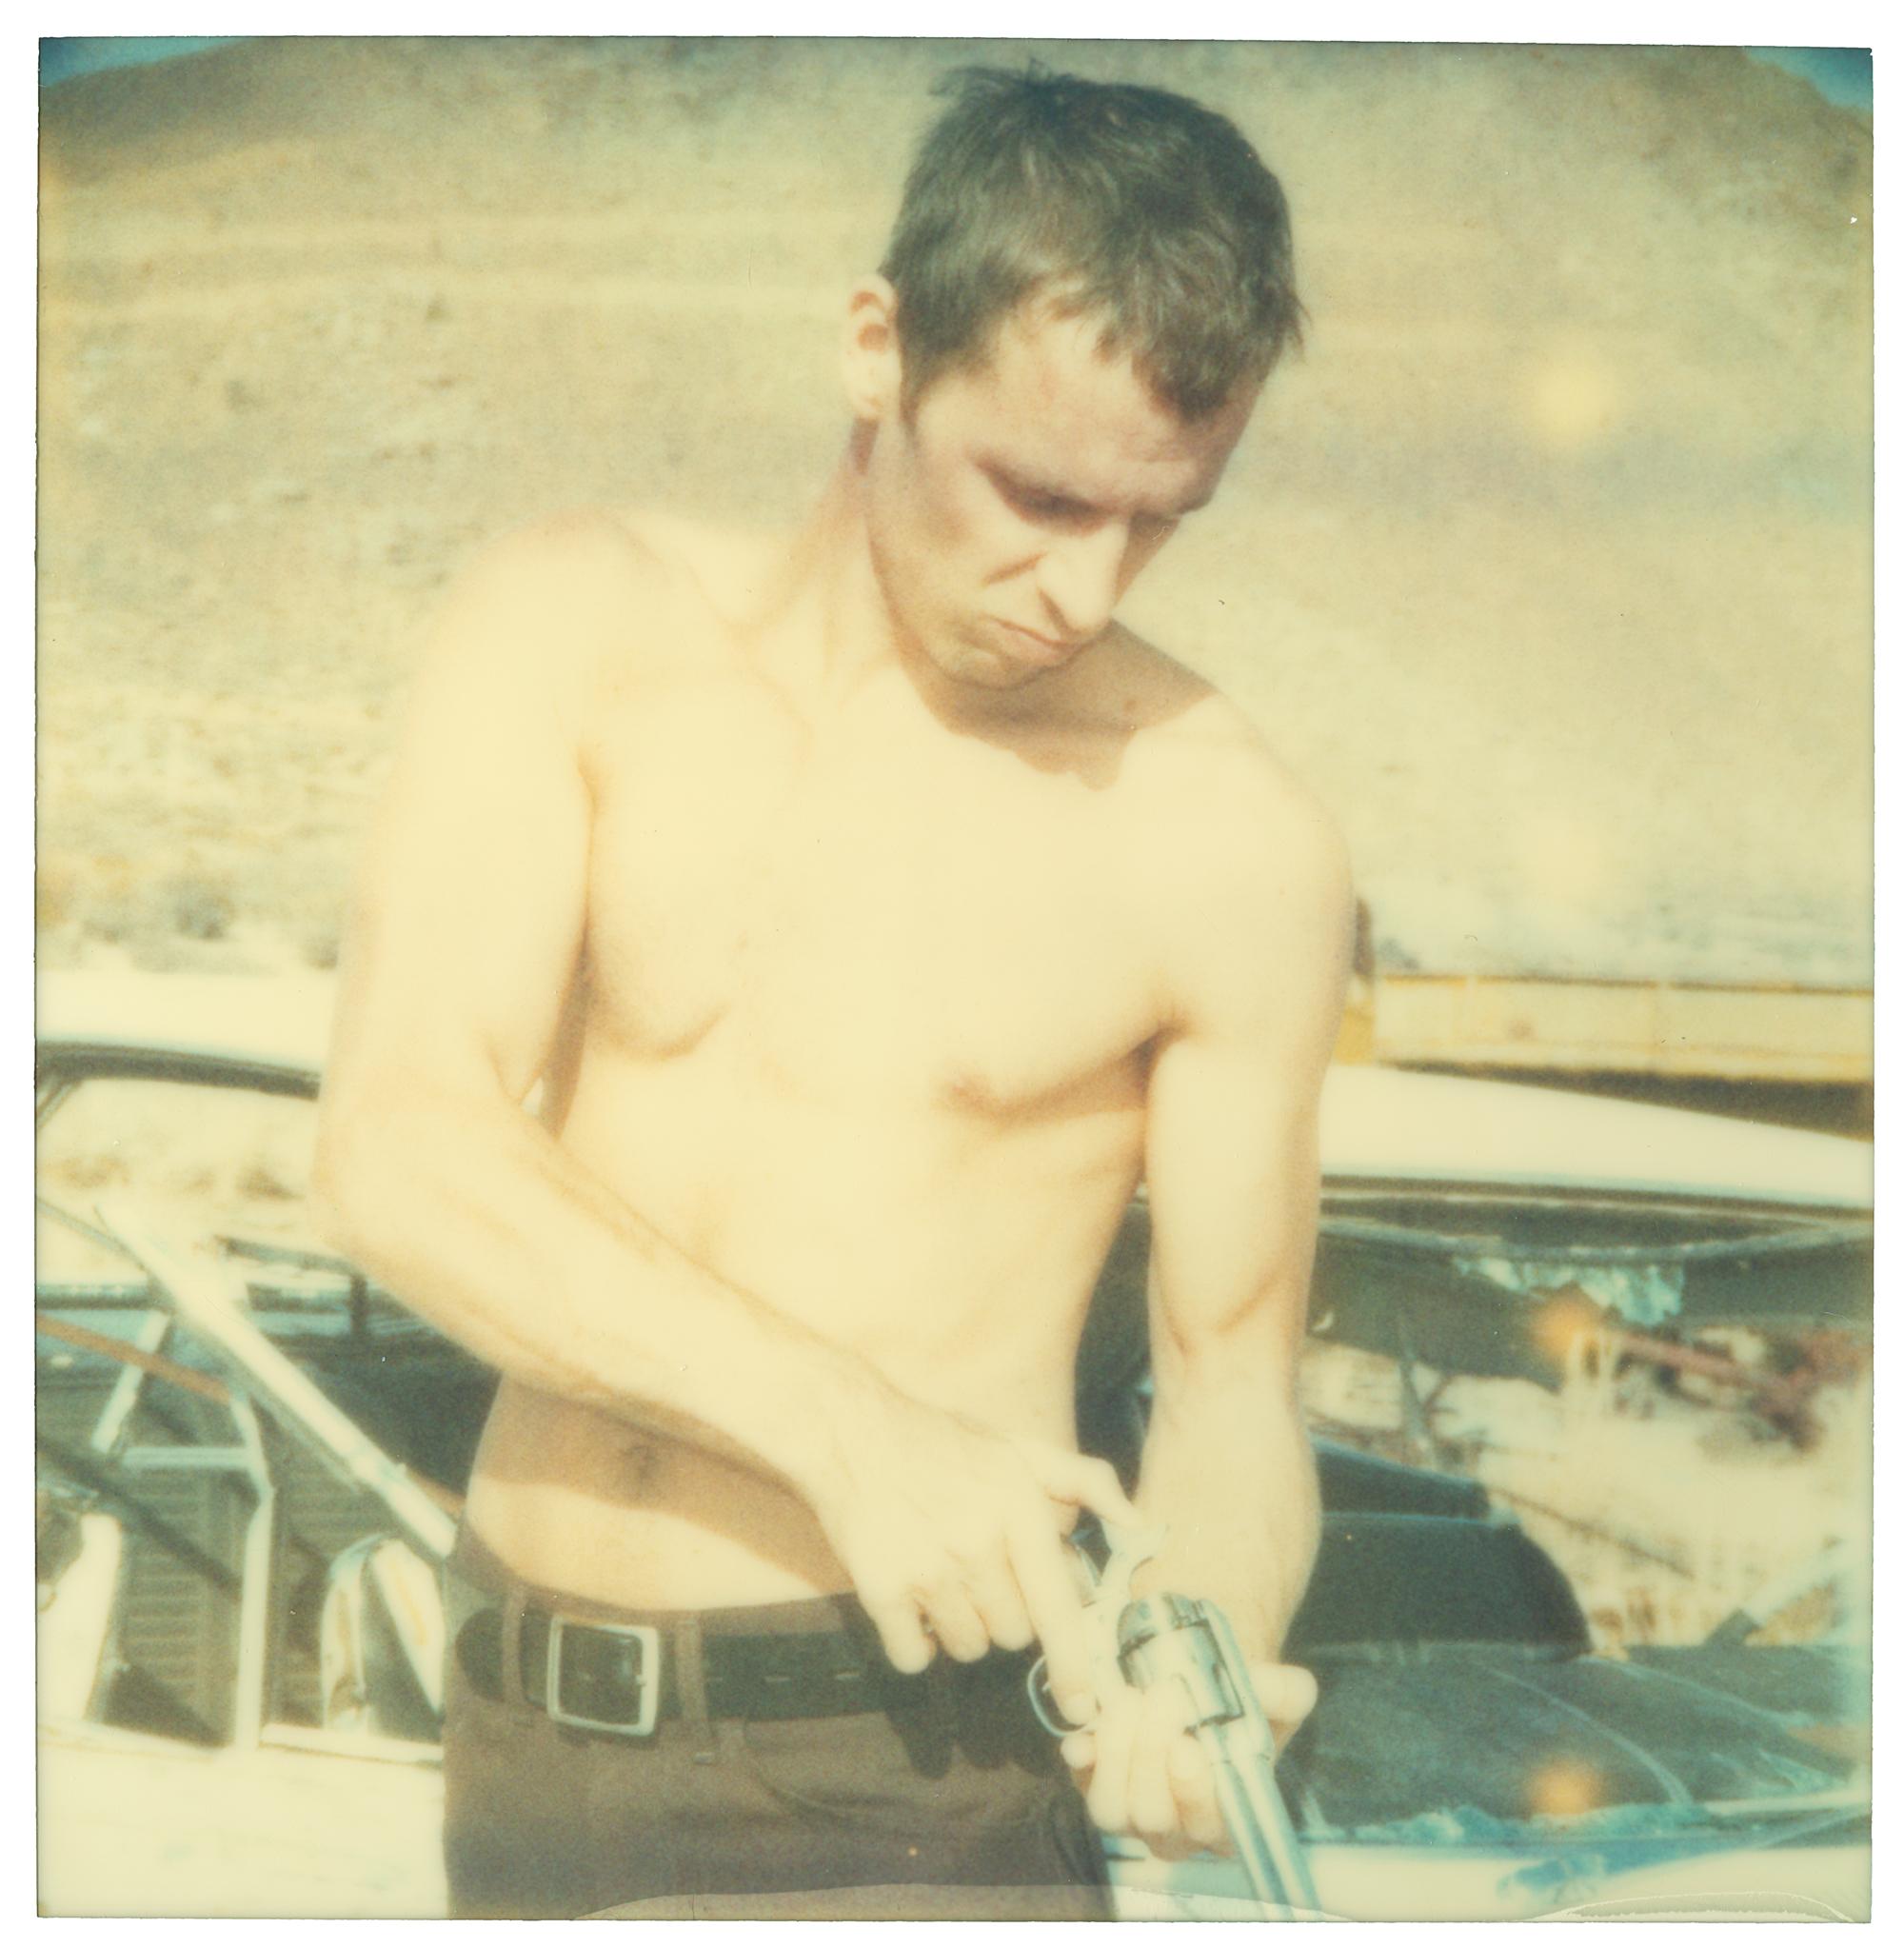 Stefanie Schneider Color Photograph - Loading the Gun (Wastelands) - analog, mounted